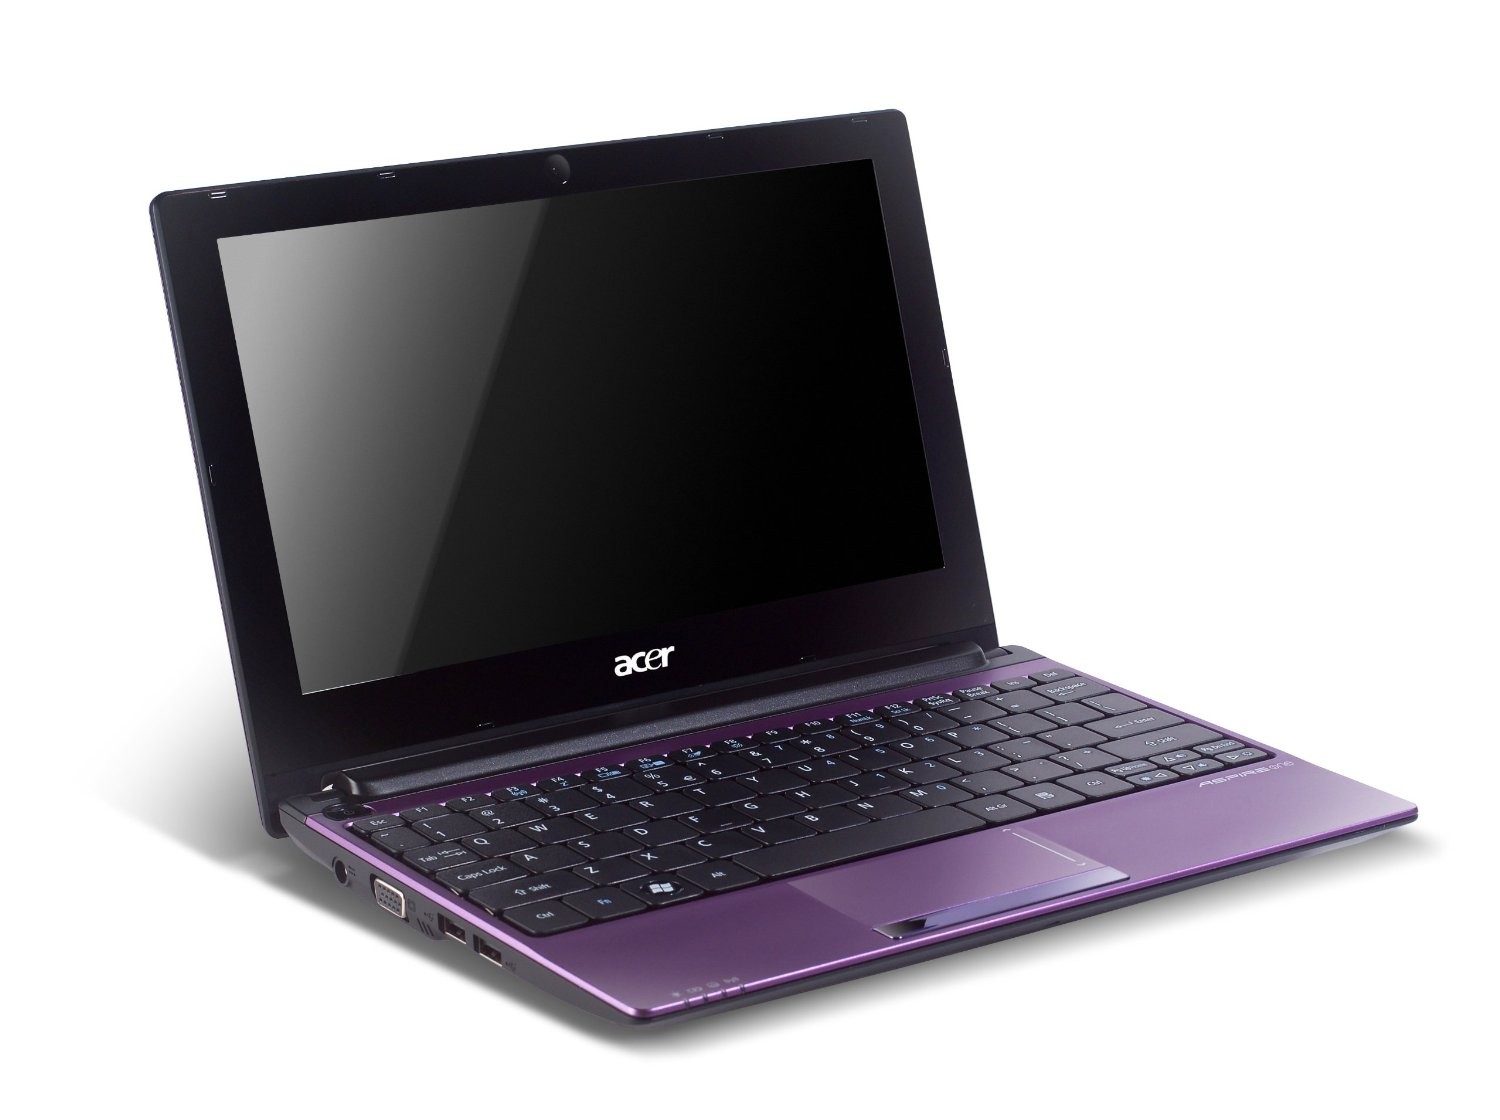 Refurbished Acer Aspire One D260 Purple Netbook. Buy refurbished windows 7 laptops and netbooks